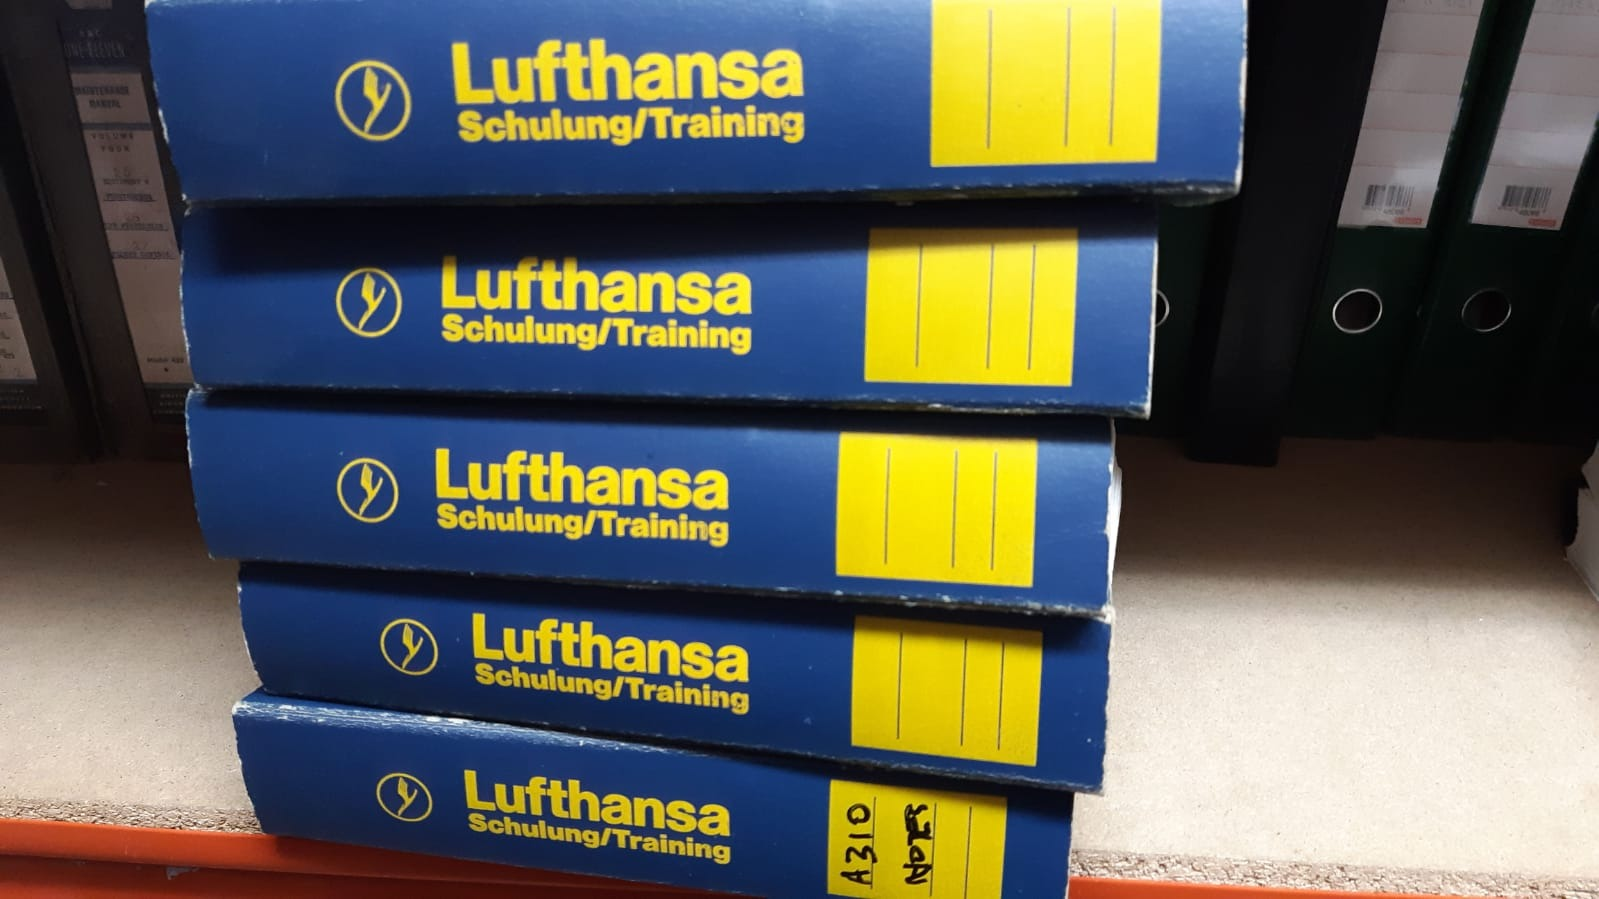 Lufthansa Training Manuals